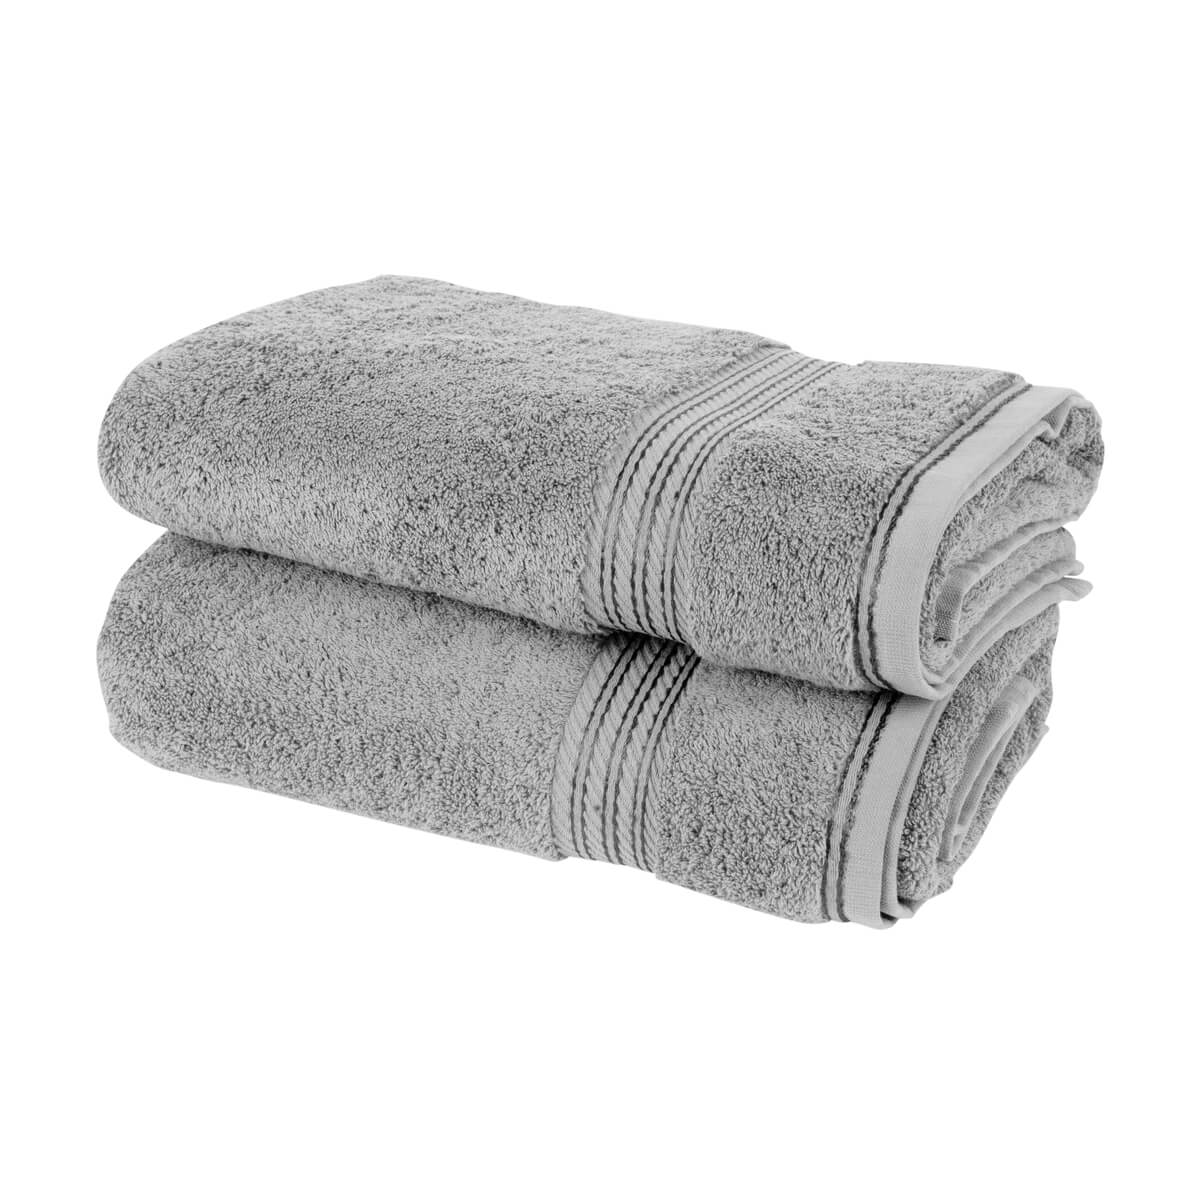  ATEN Homeware Luxury Egyptian Cotton Bath Towels Extra